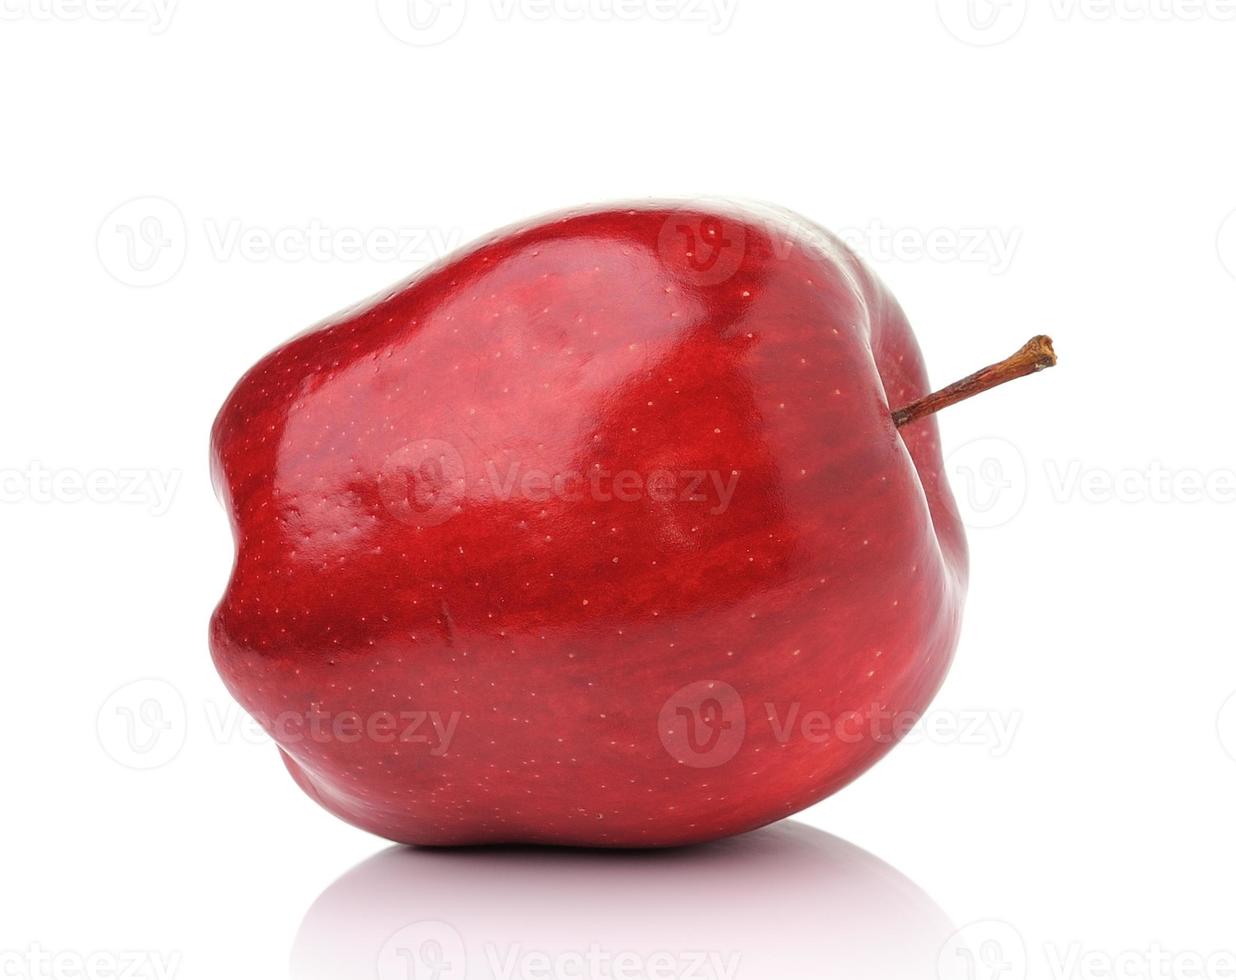 manzana roja madura foto